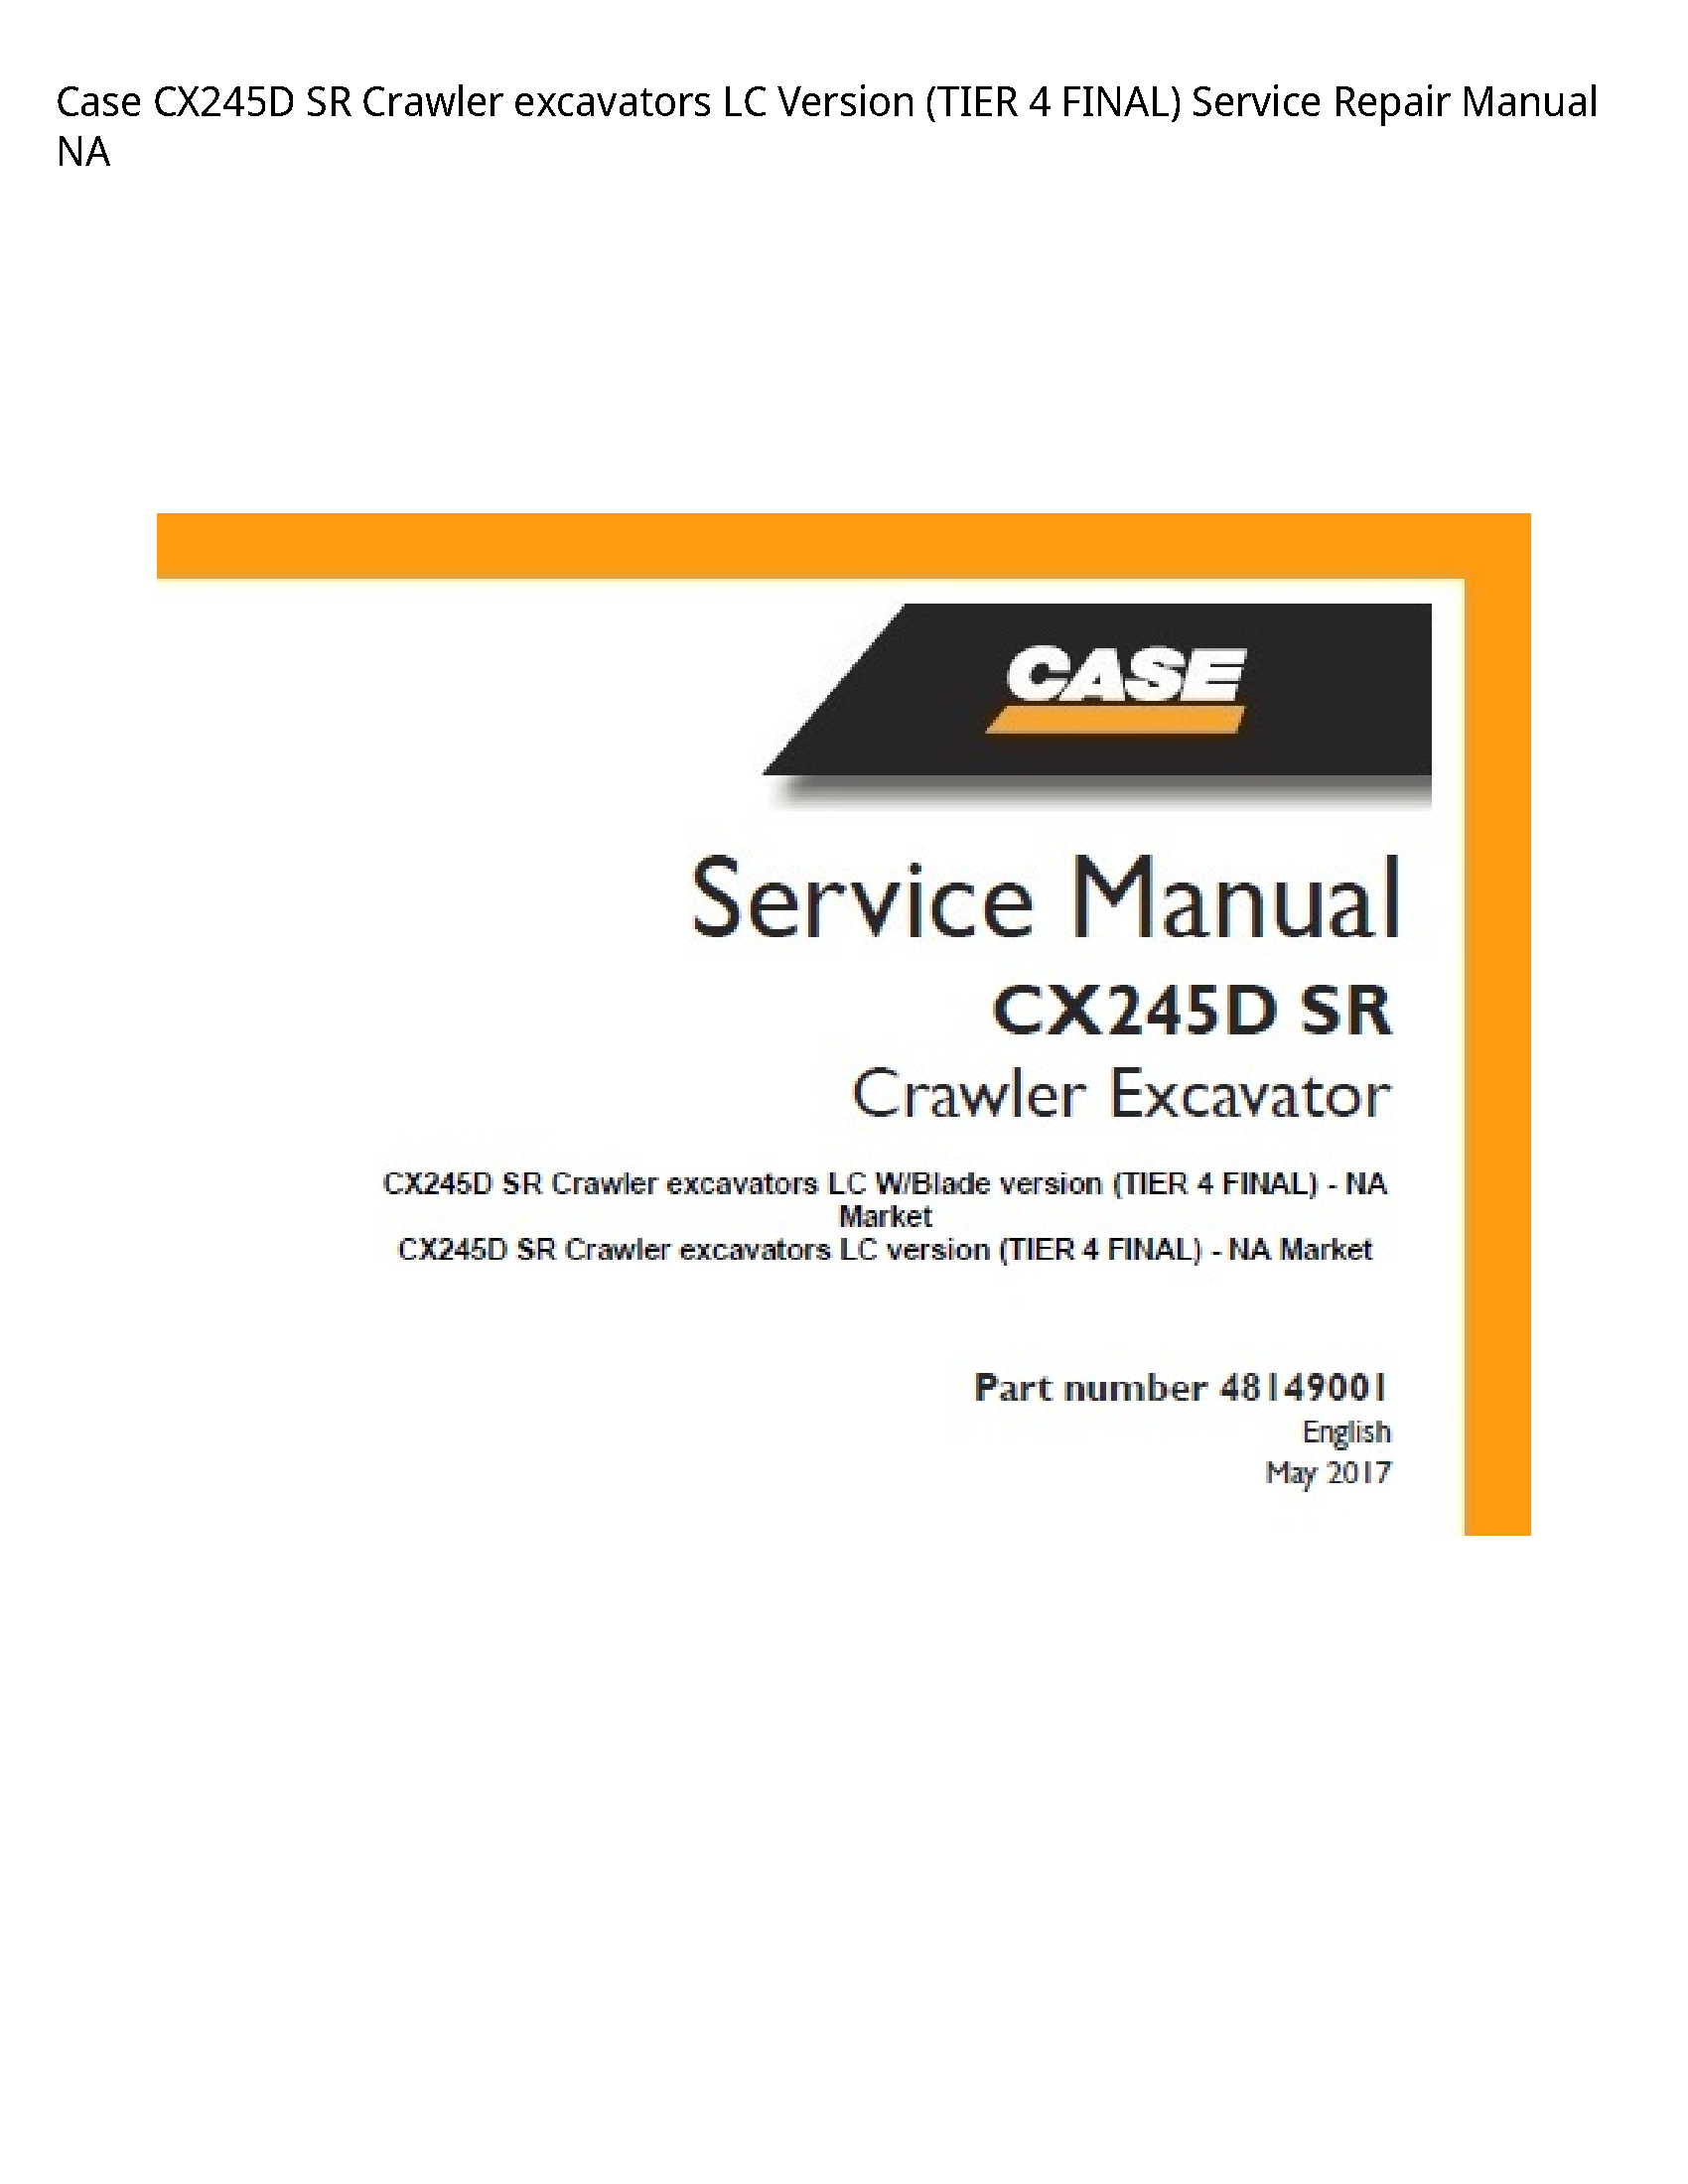 Case/Case IH CX245D SR Crawler excavators LC Version (TIER FINAL) manual